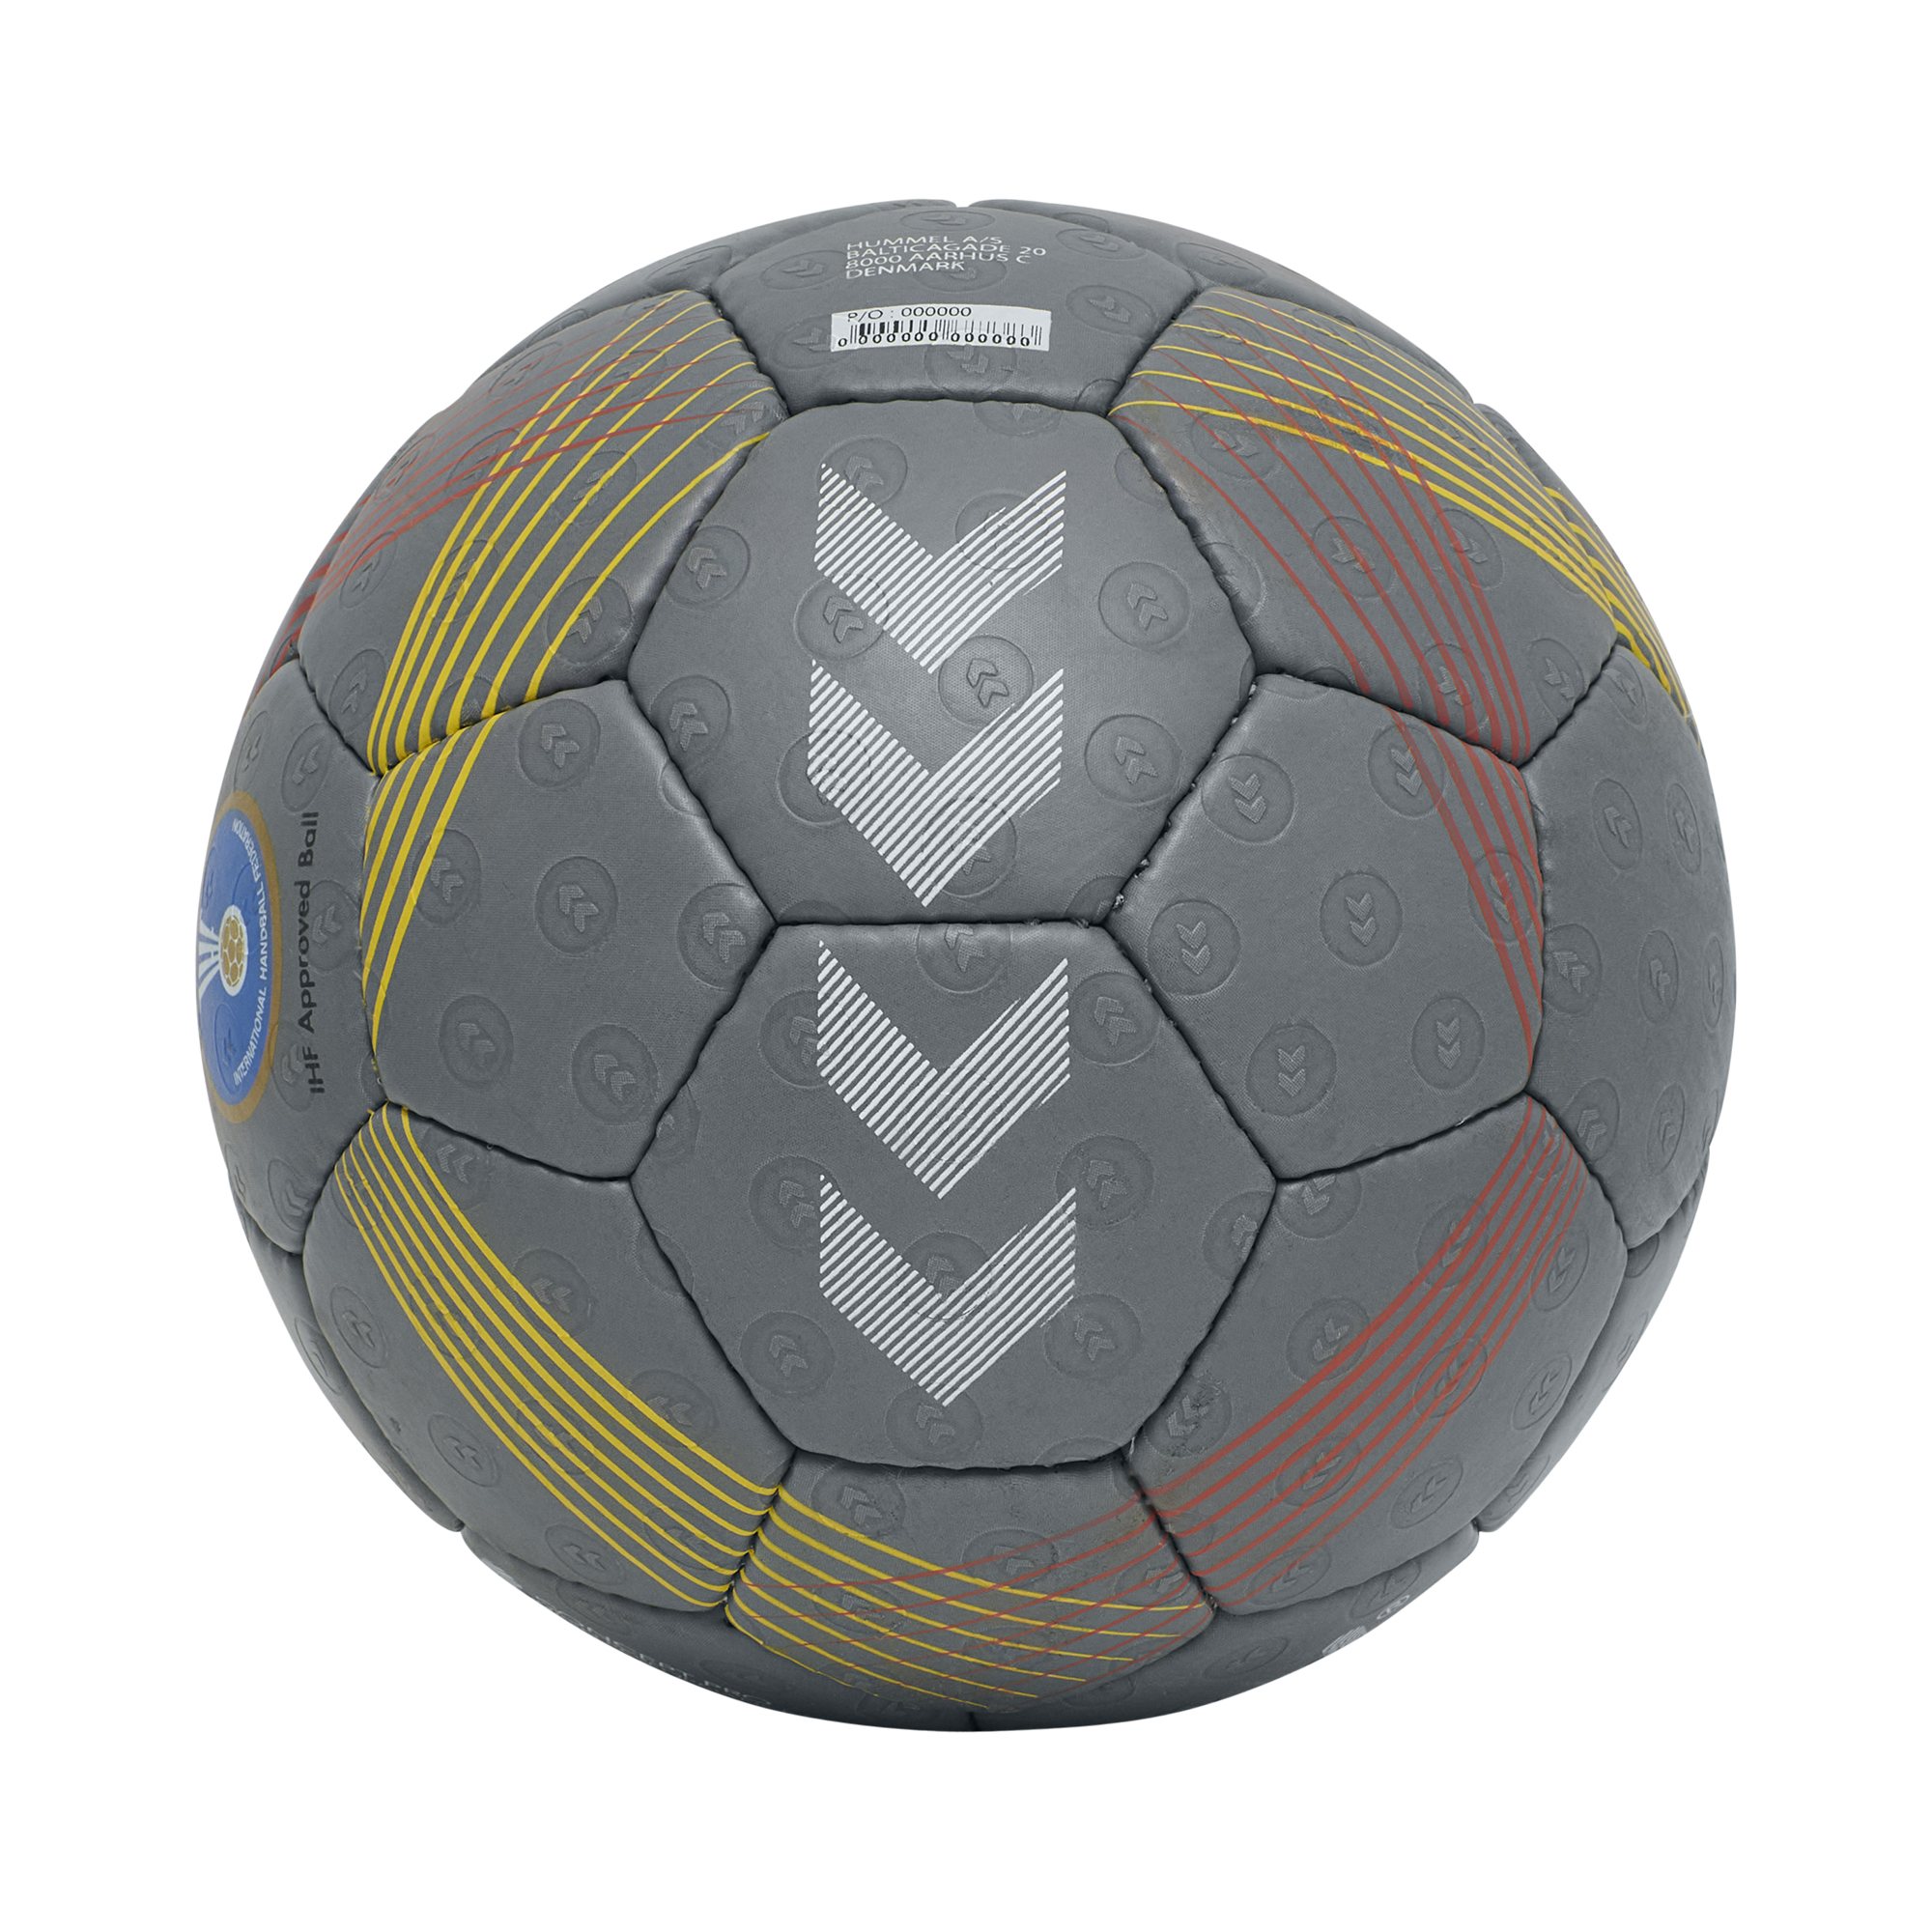 Hummel Concept Pro Handball